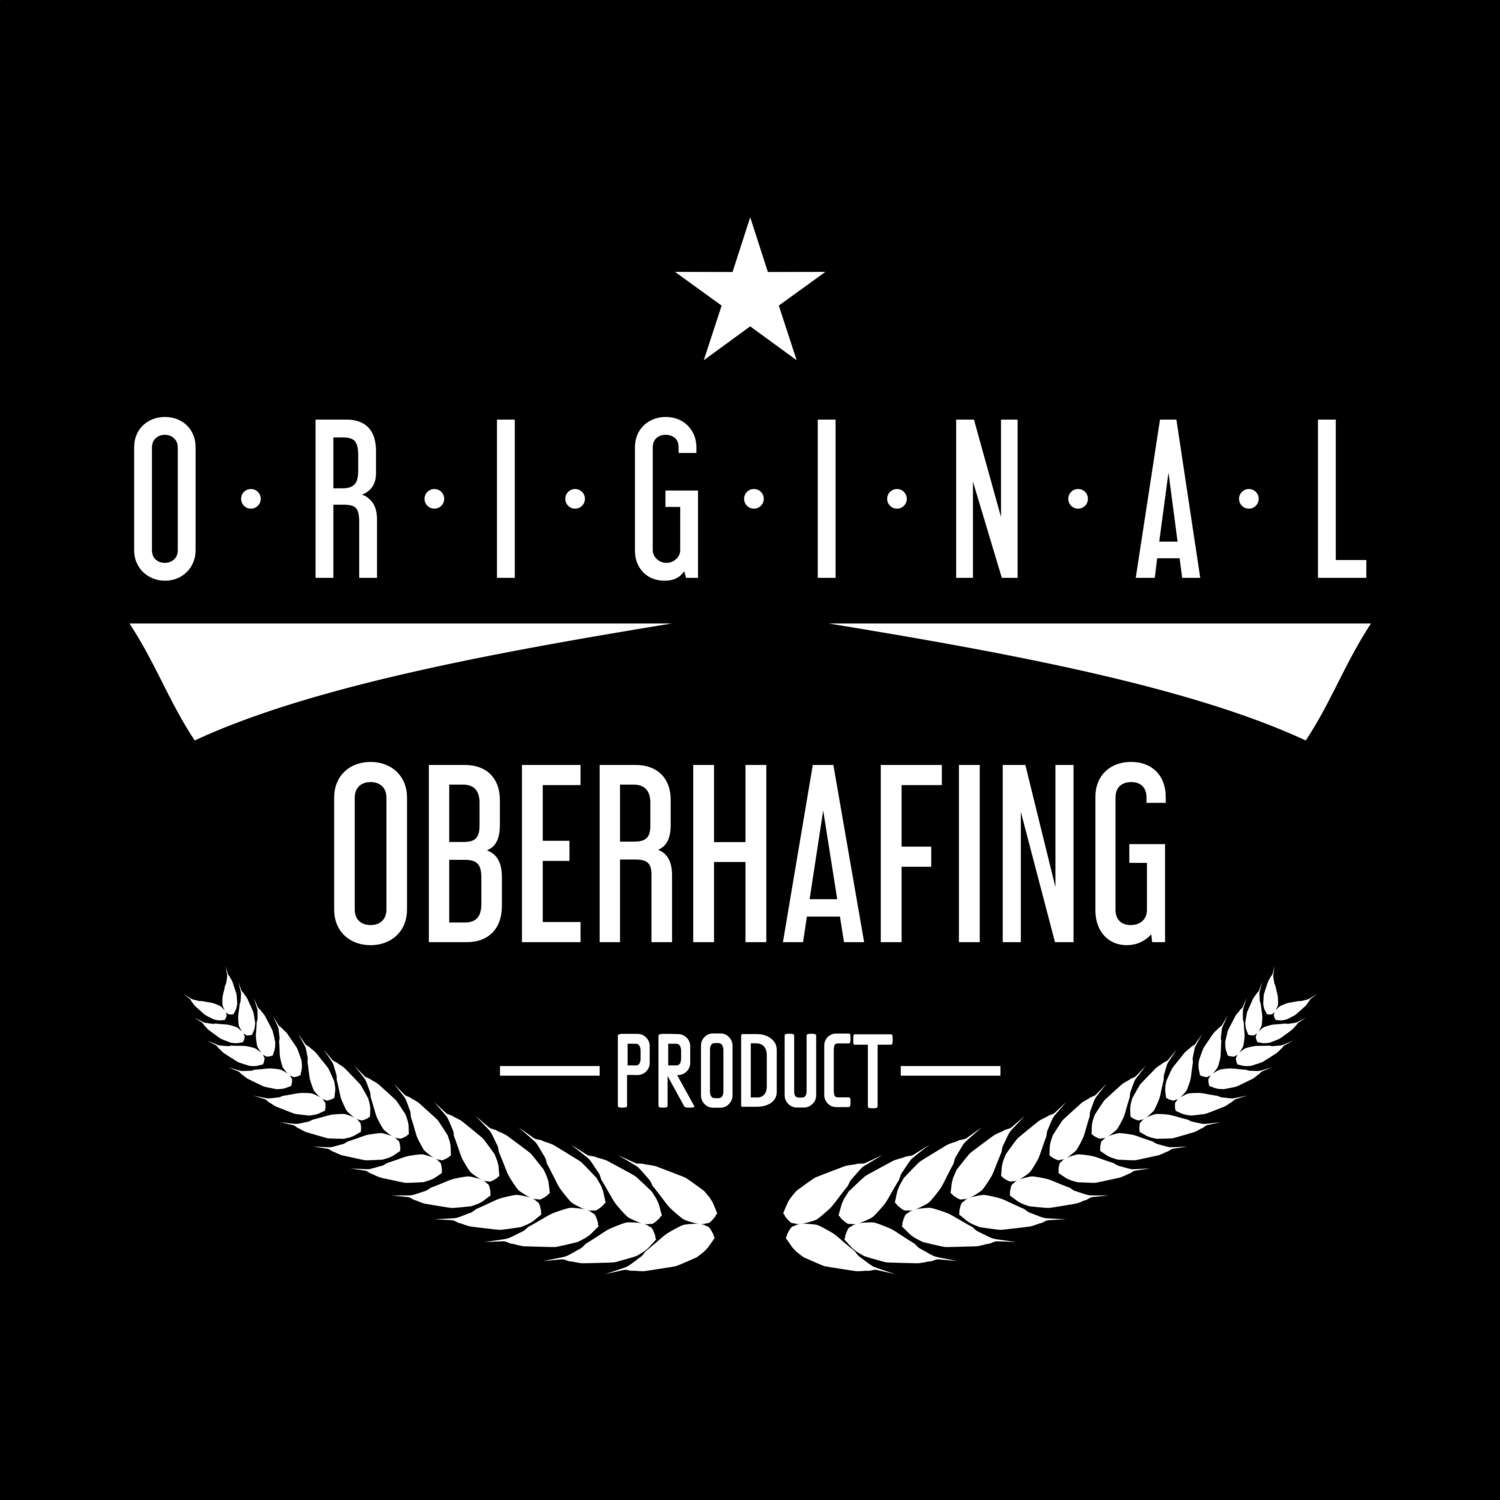 Oberhafing T-Shirt »Original Product«